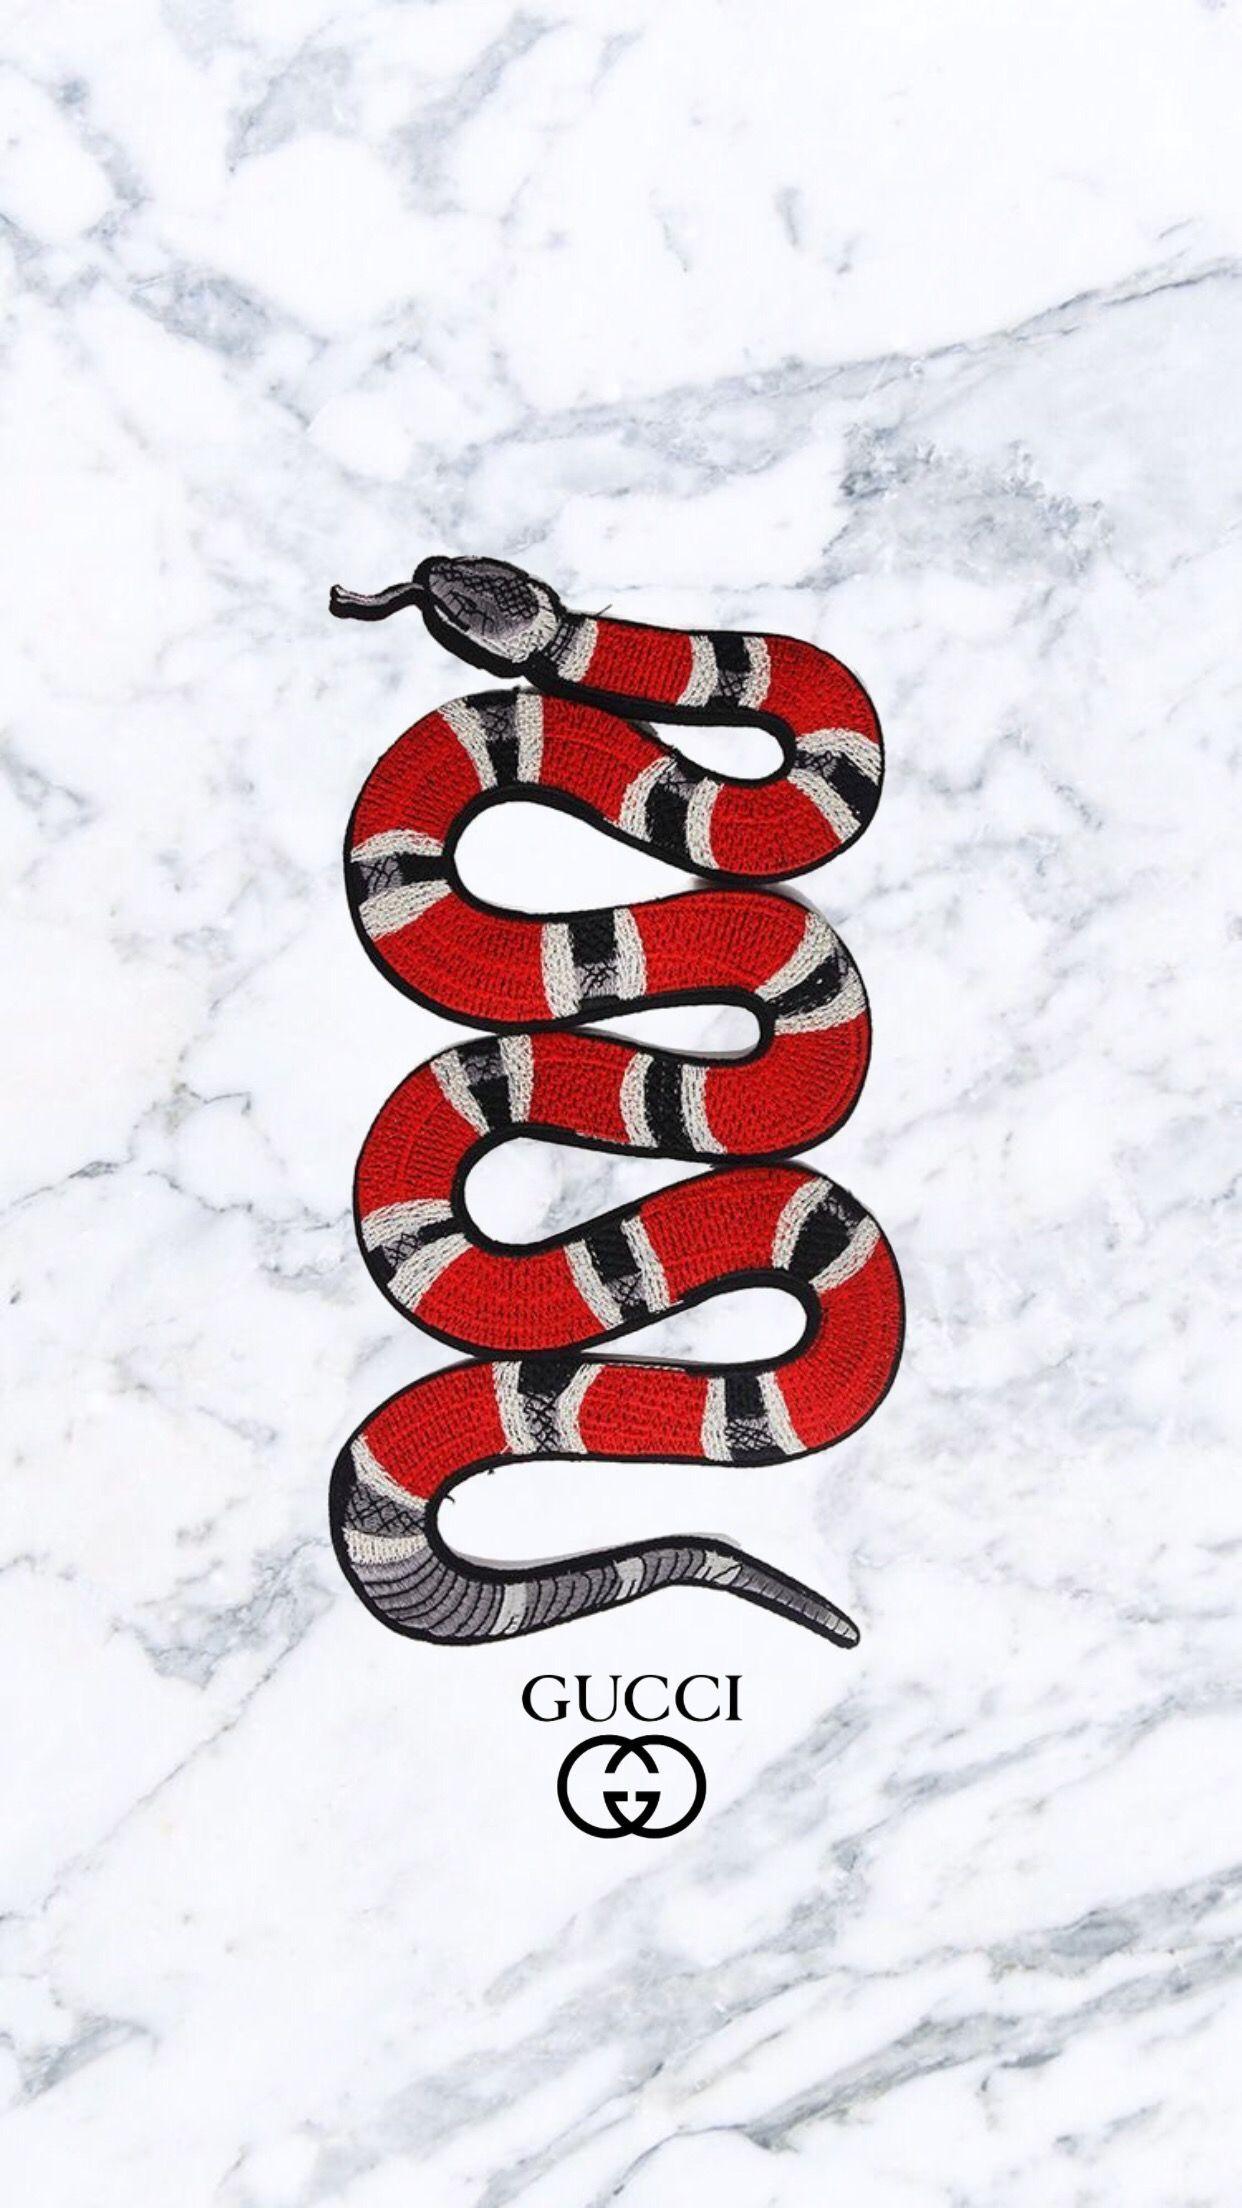 iPhoneBackground. Gucci wallpaper iphone